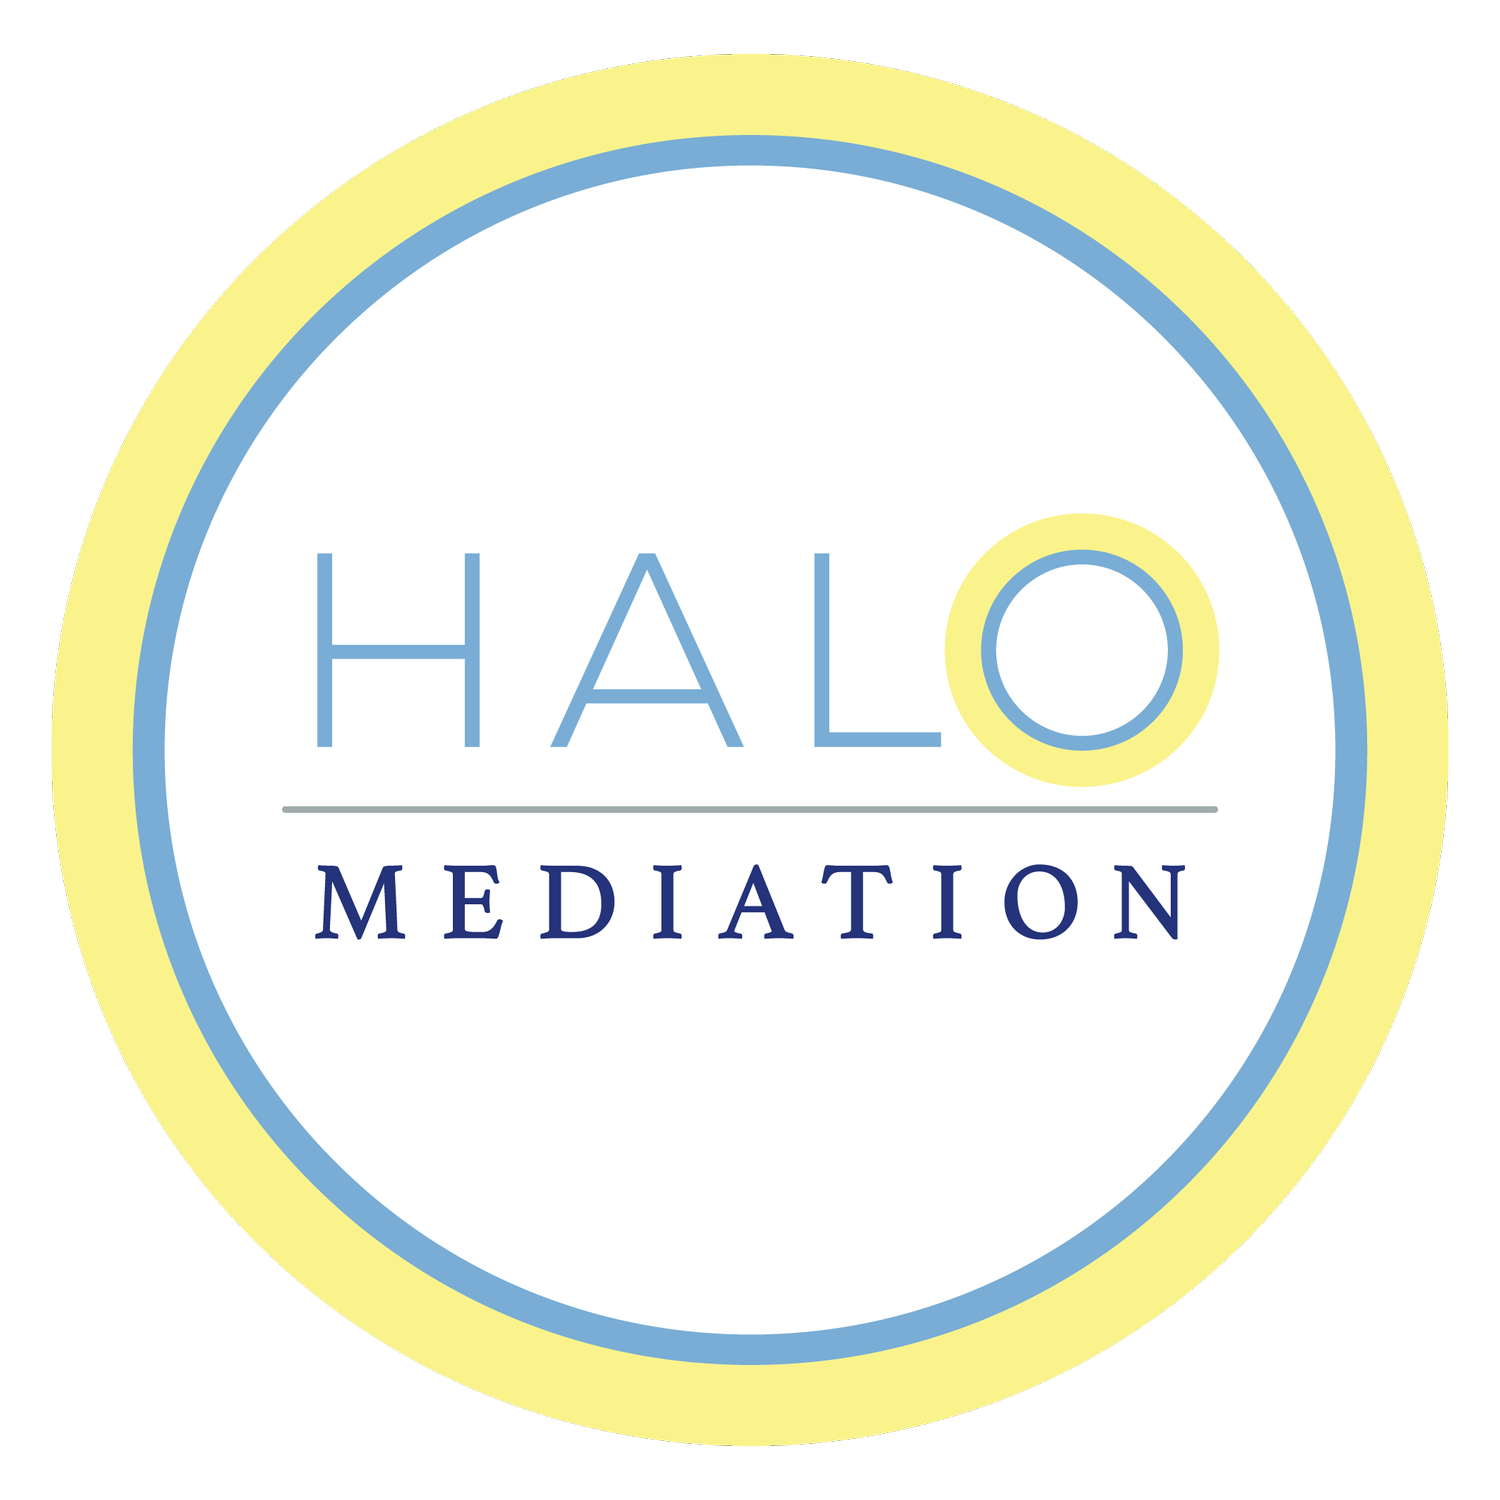 Halo Mediation